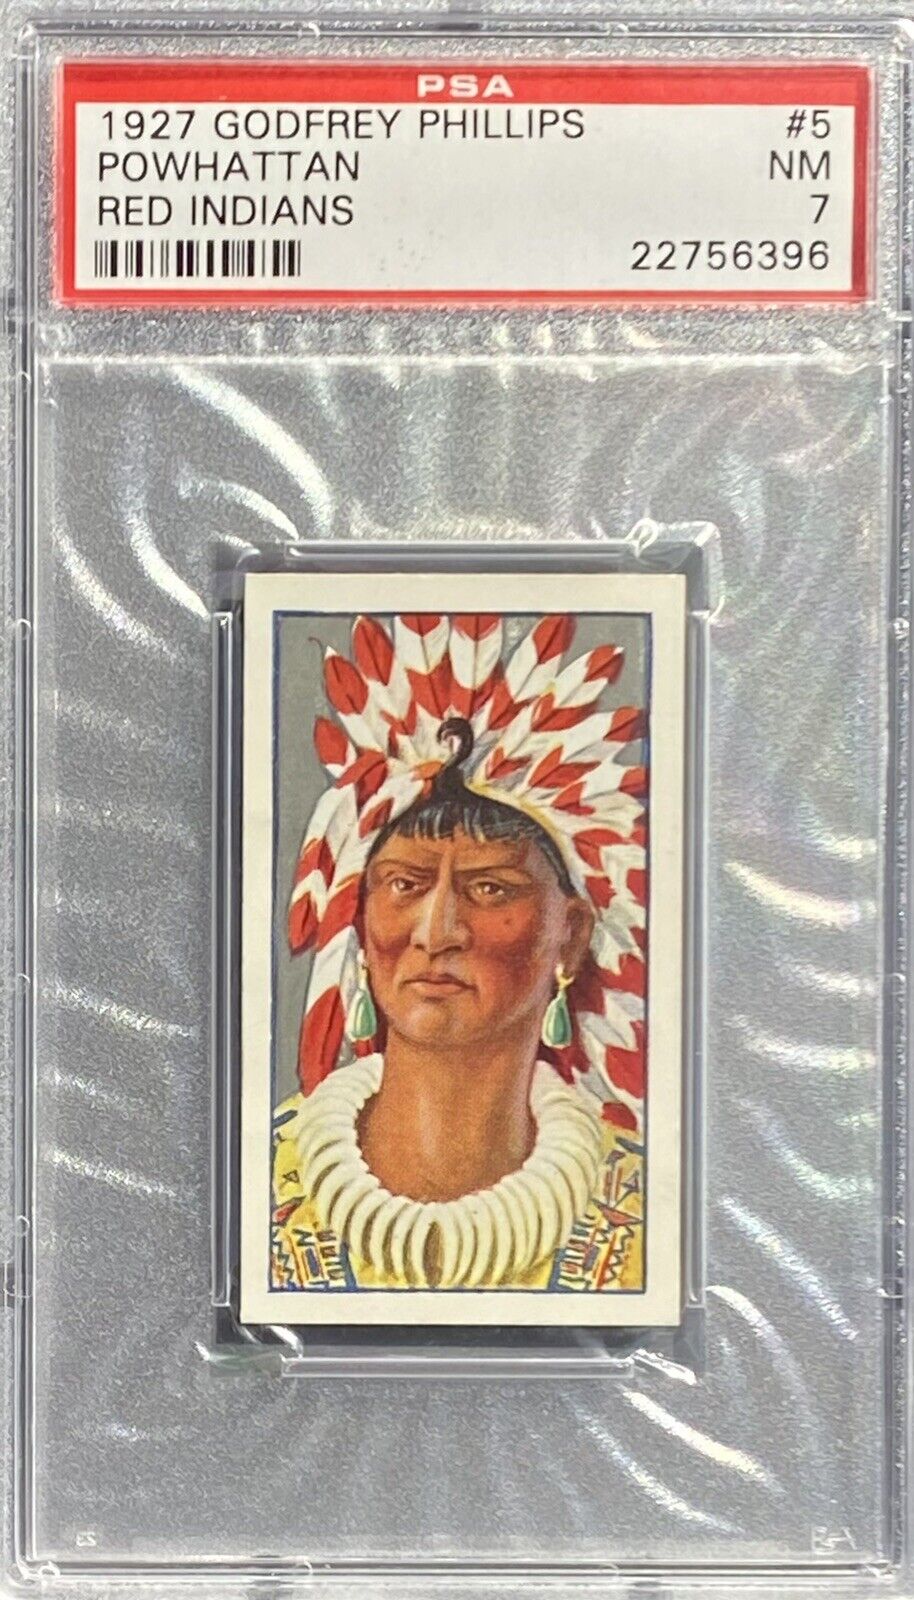 1927 Godfrey Phillips Red Indians #5 POWHATTAN - PSA 7 NM